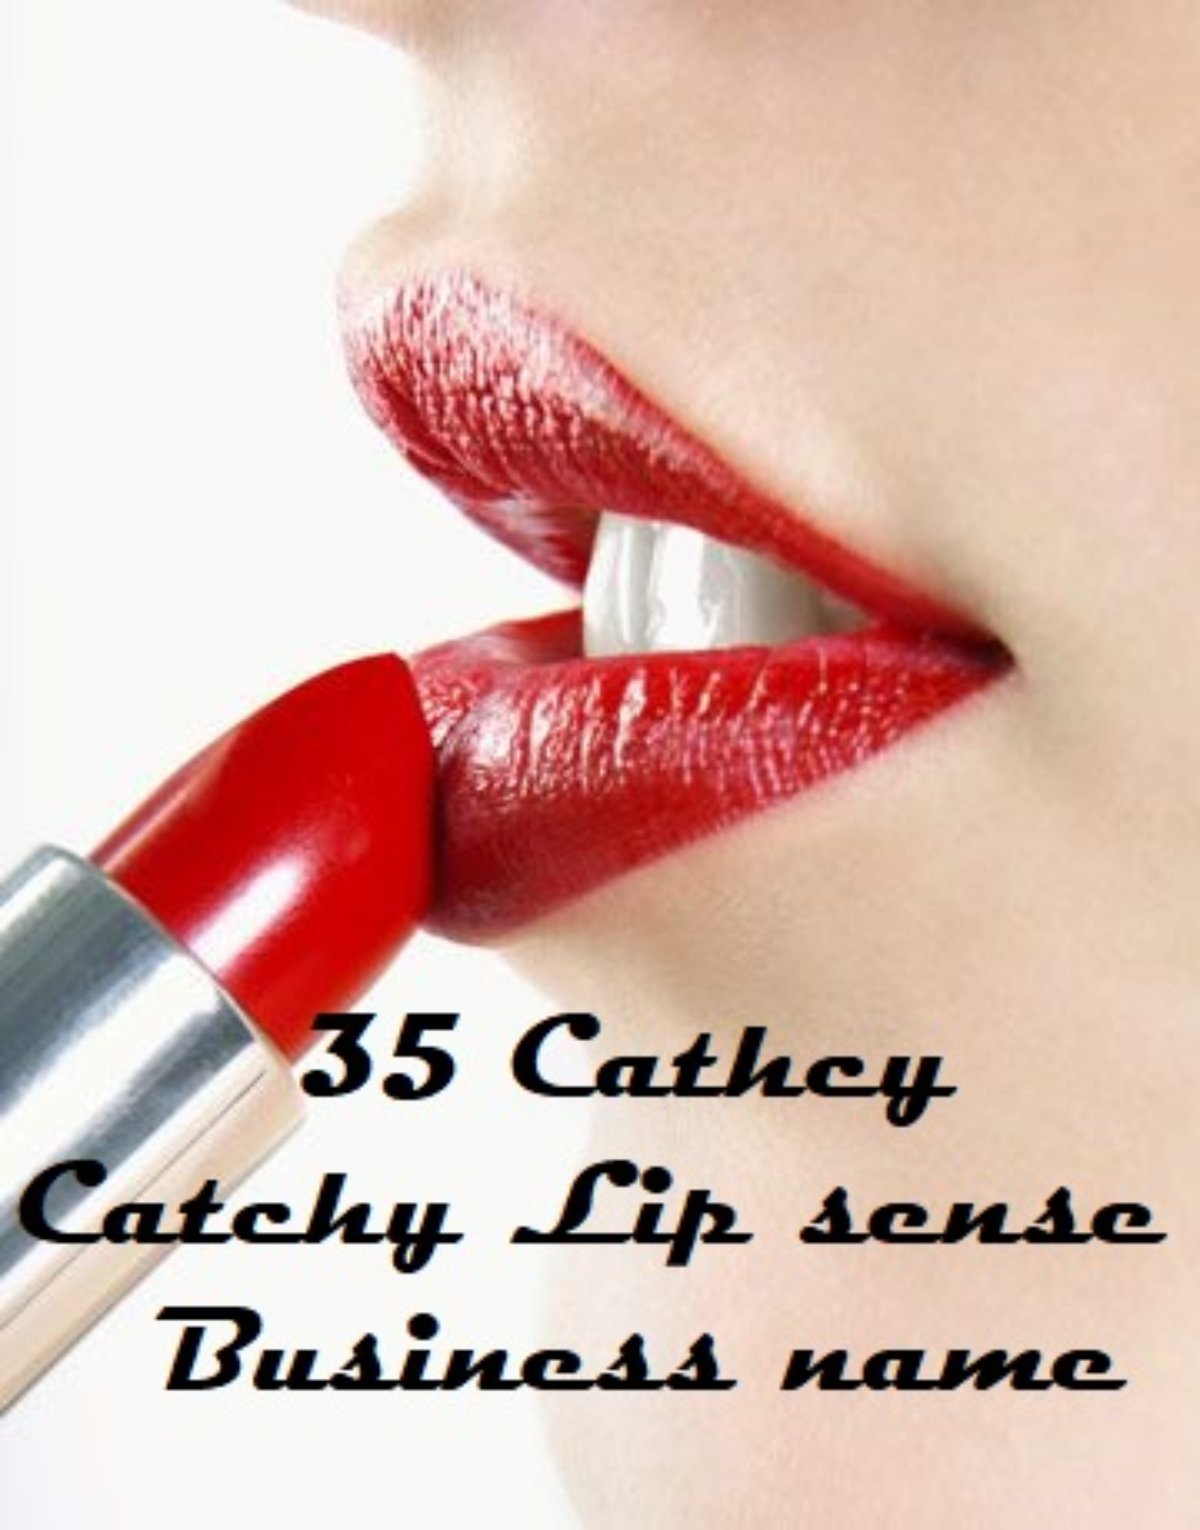 Creative 35 Lipstick Business Name Ideas